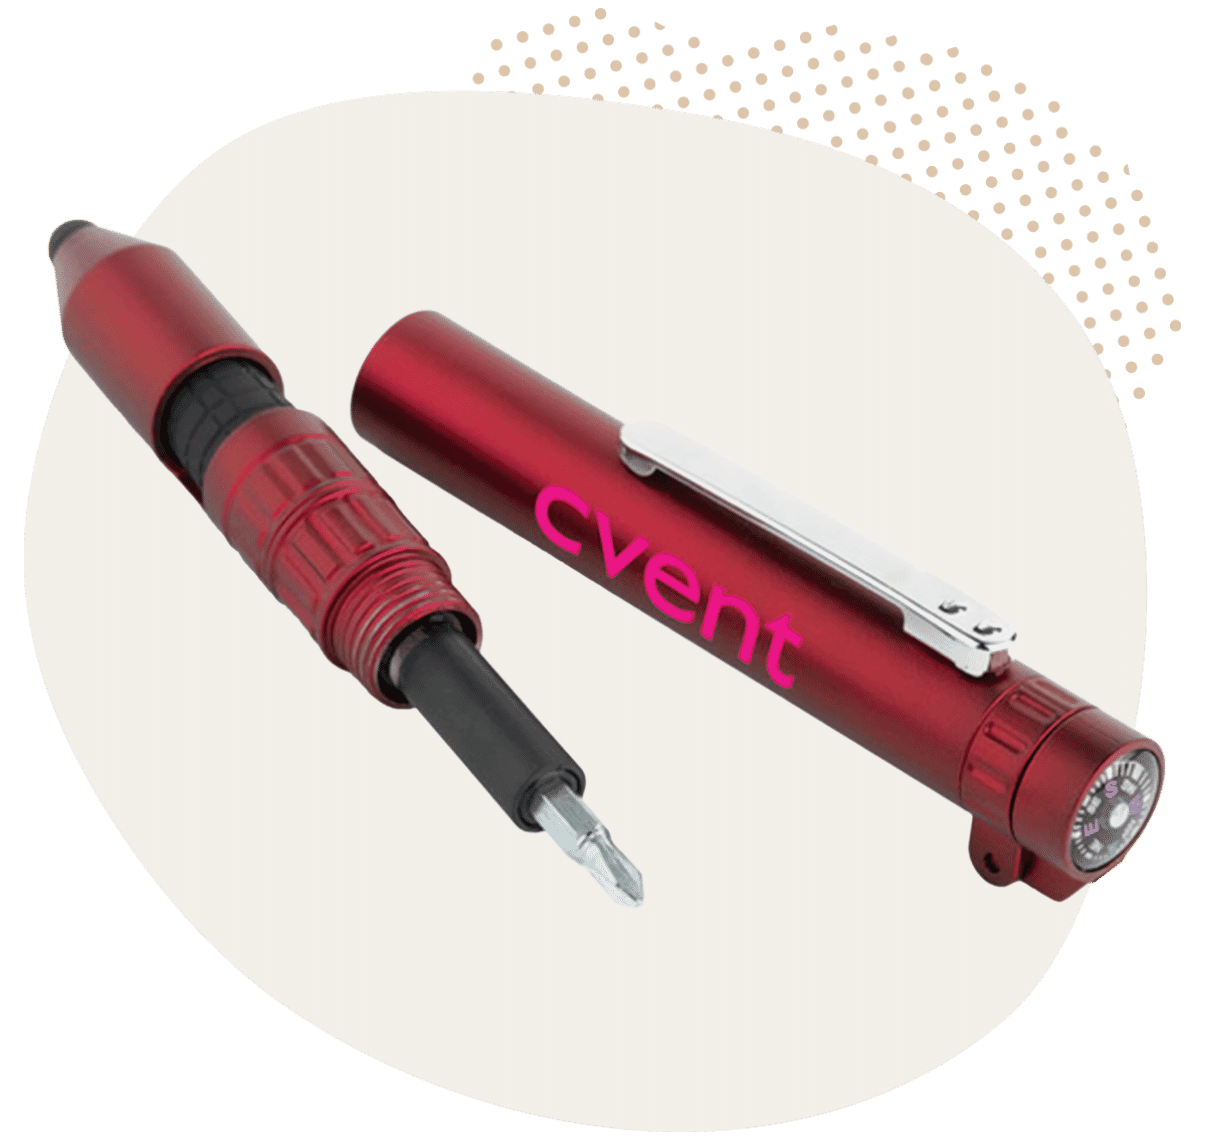 12. Multi-Tool Utility Pen